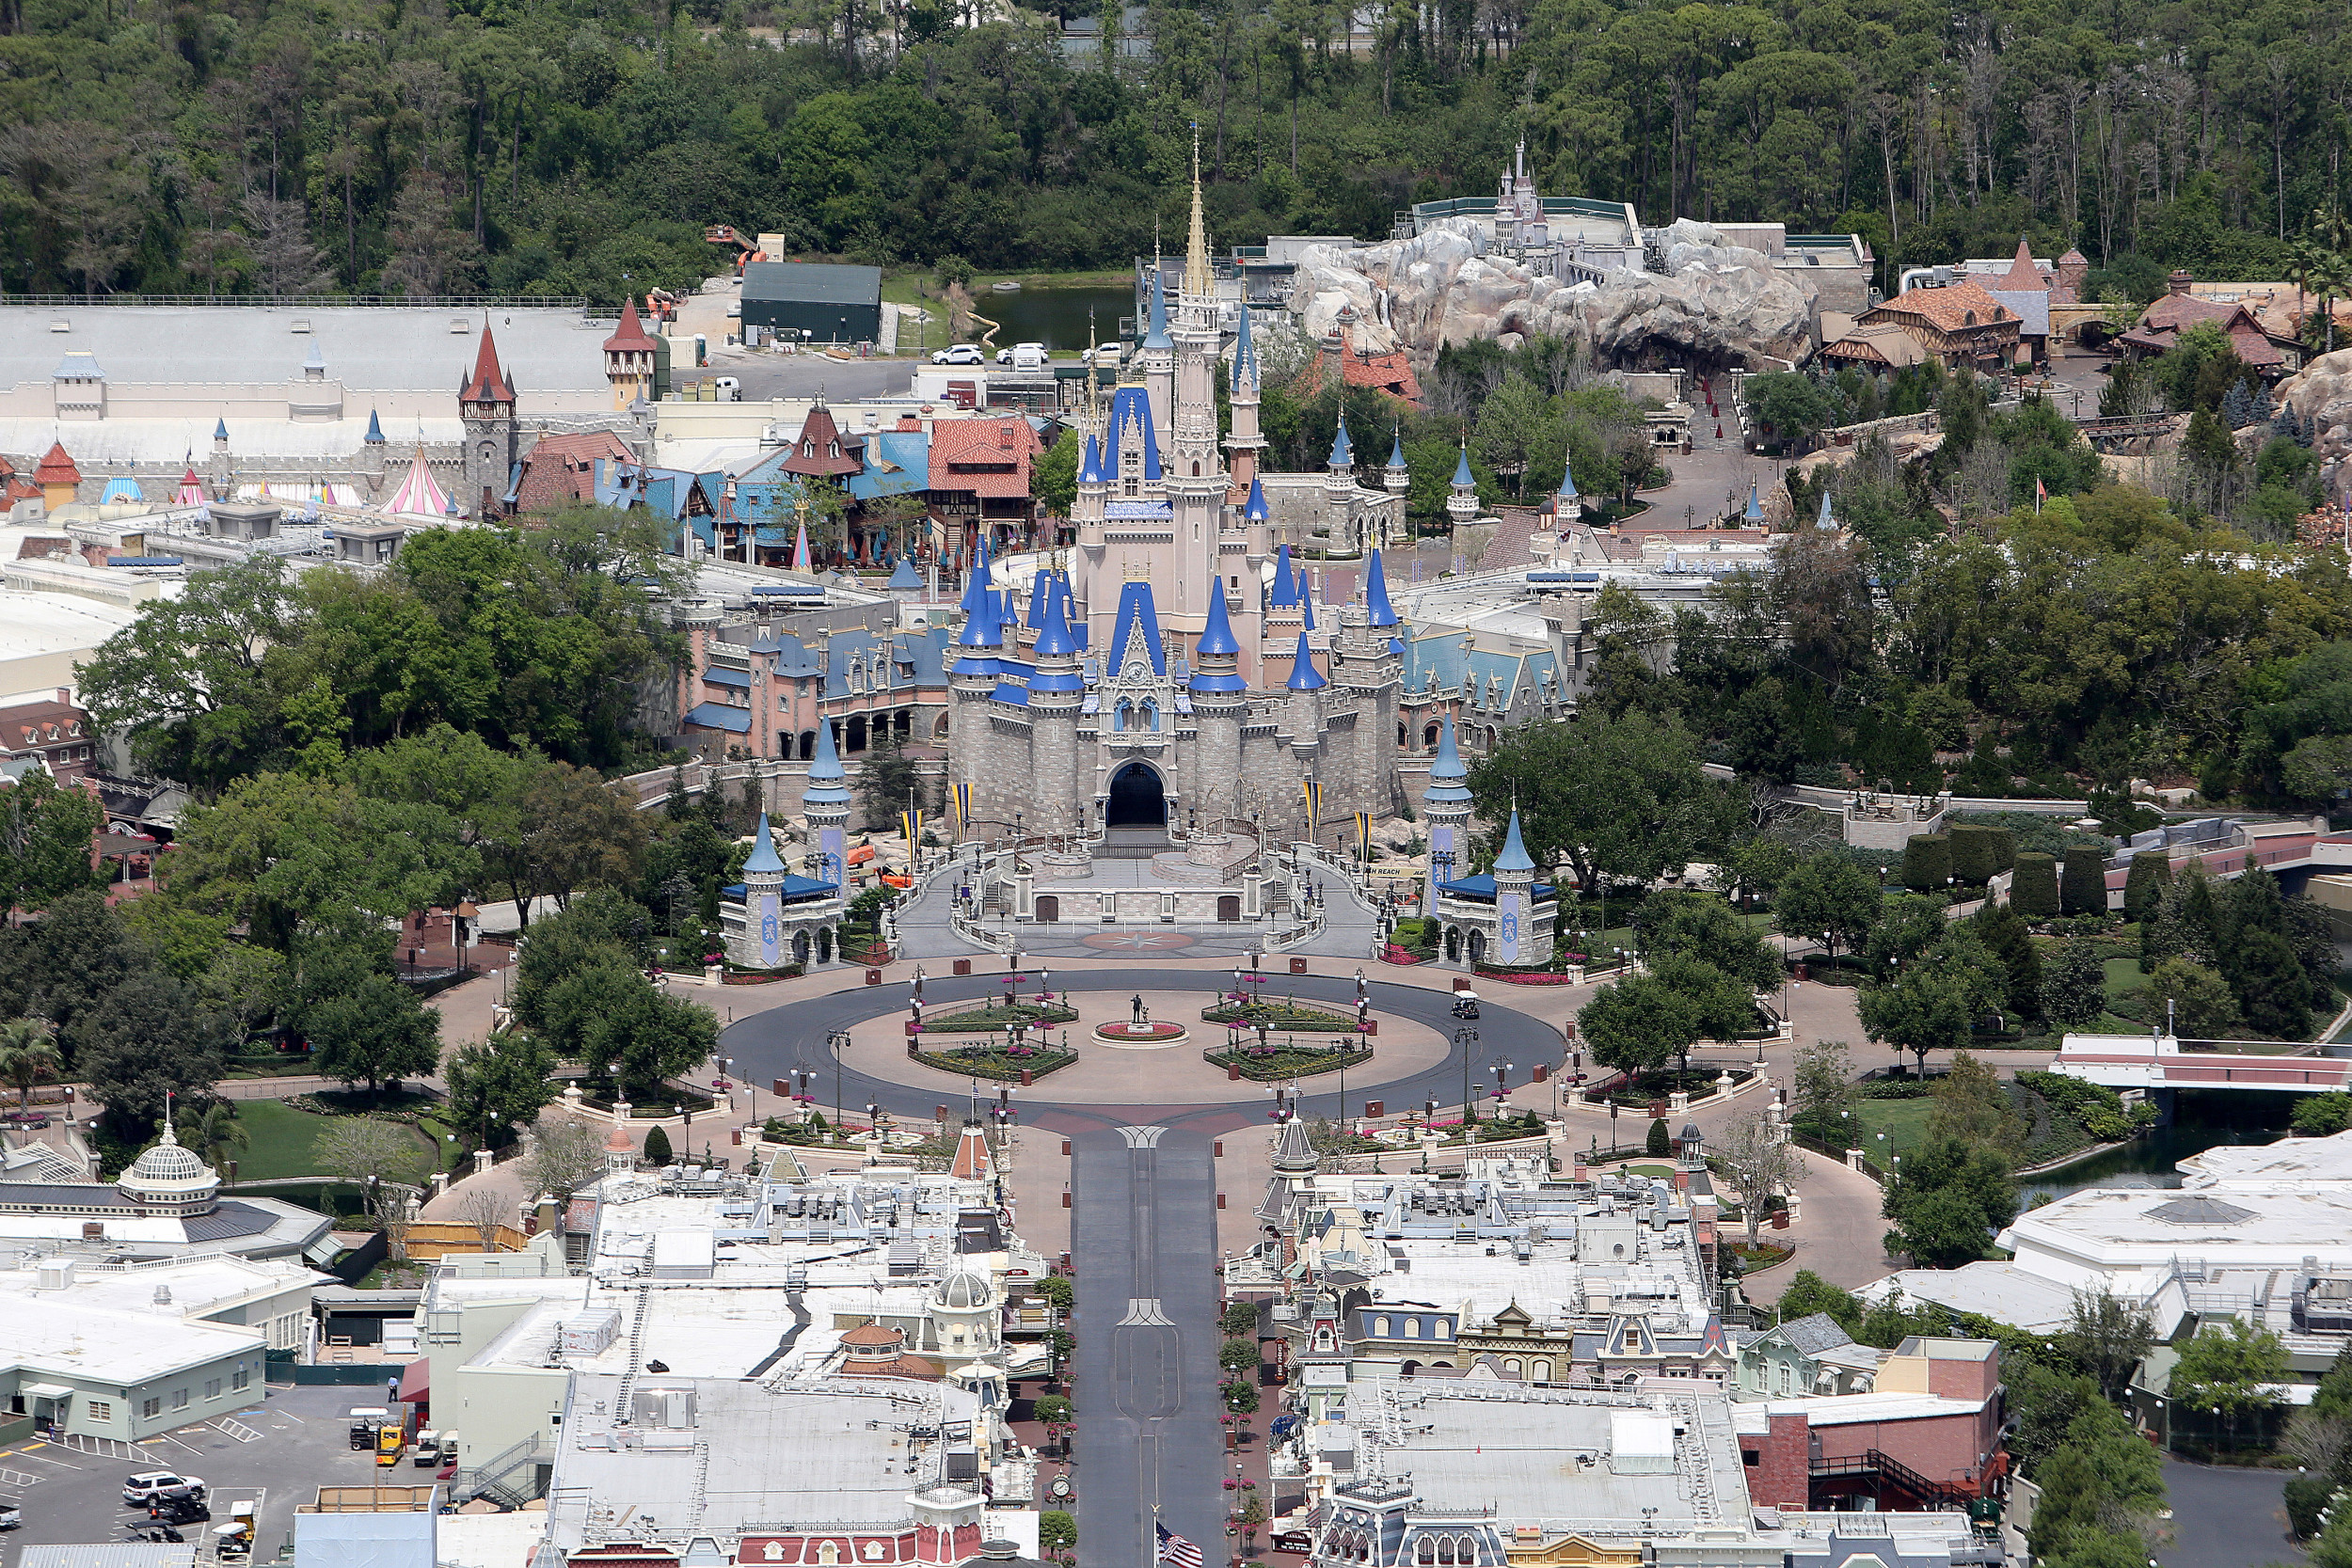 When Will Disney World Reopen? Resort Unlikely to Open Soon Despite